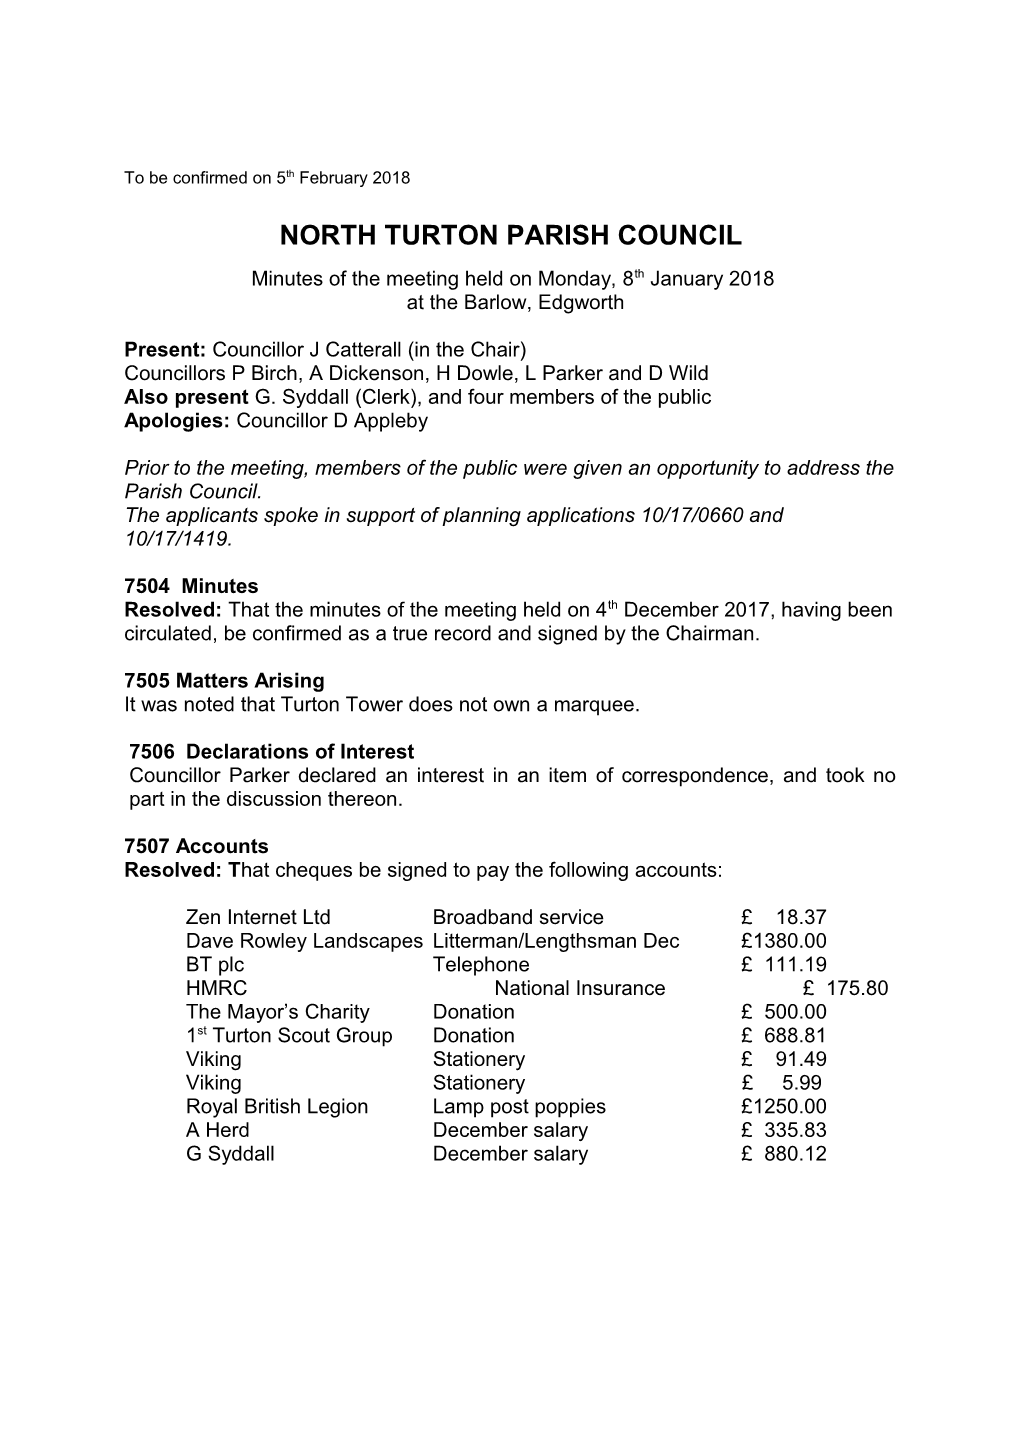 North Turton Parish Council